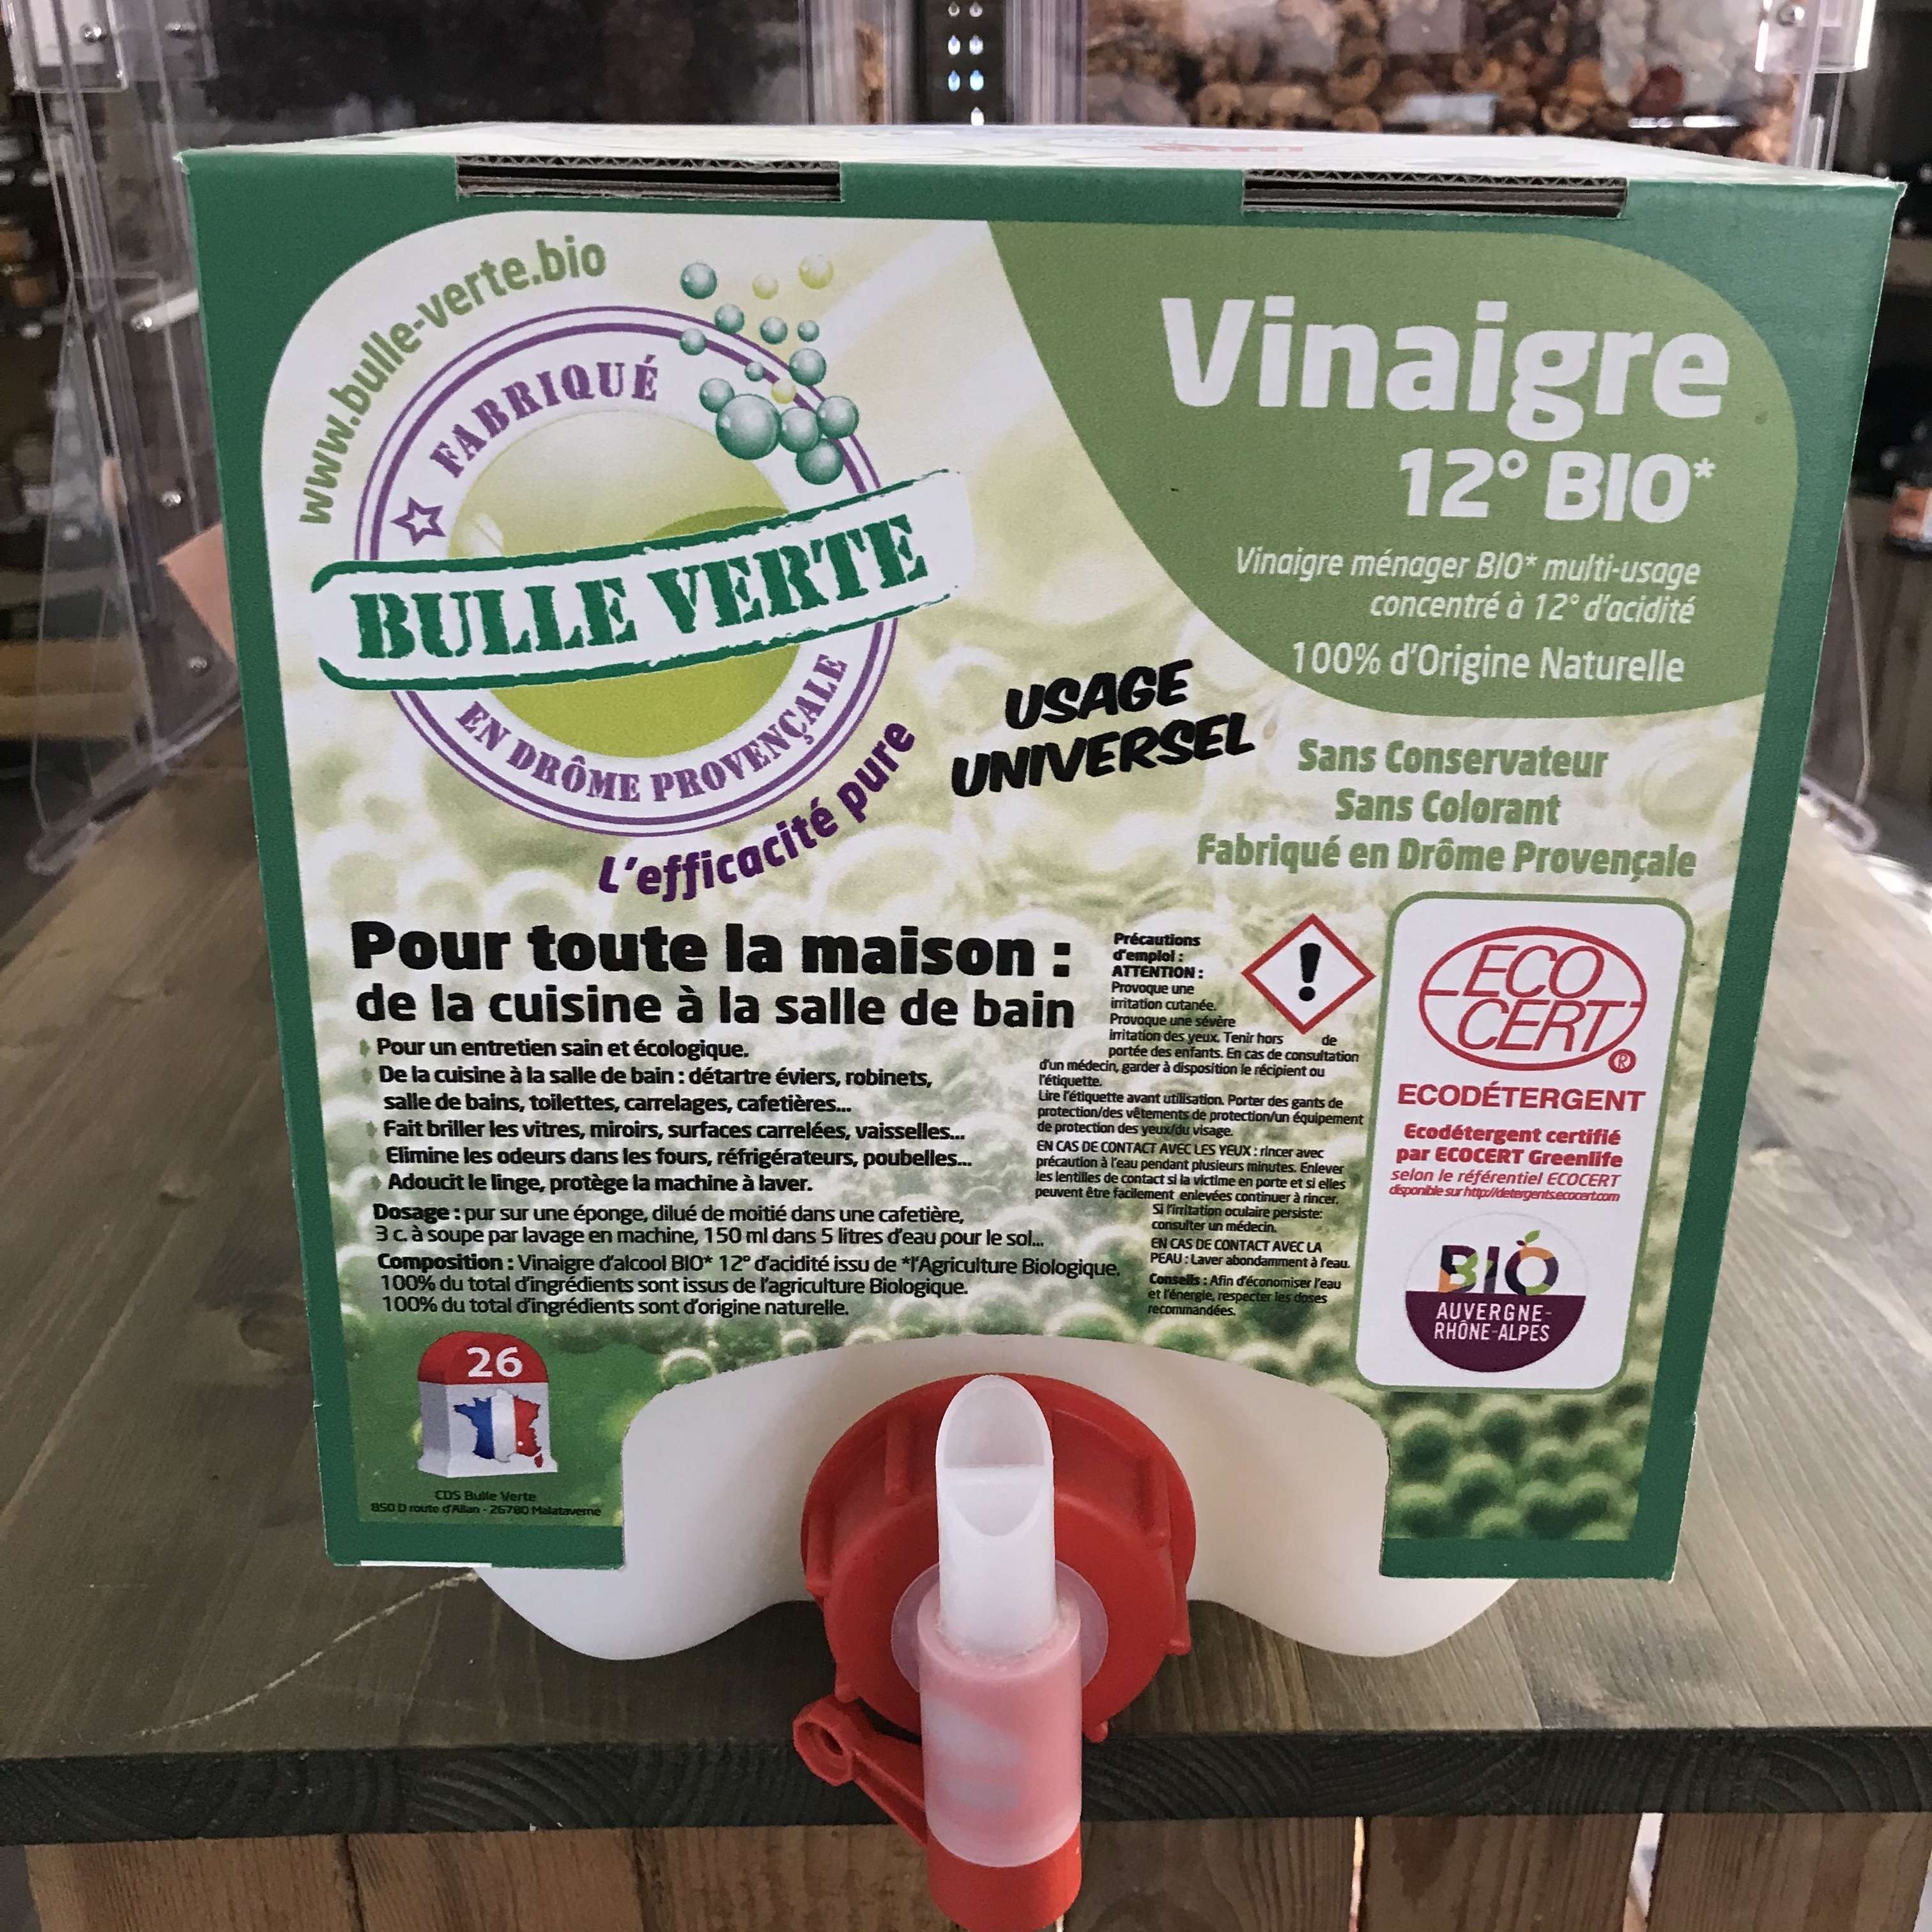 Choisissez le vinaigre blanc Bulle Verte 100% naturel !